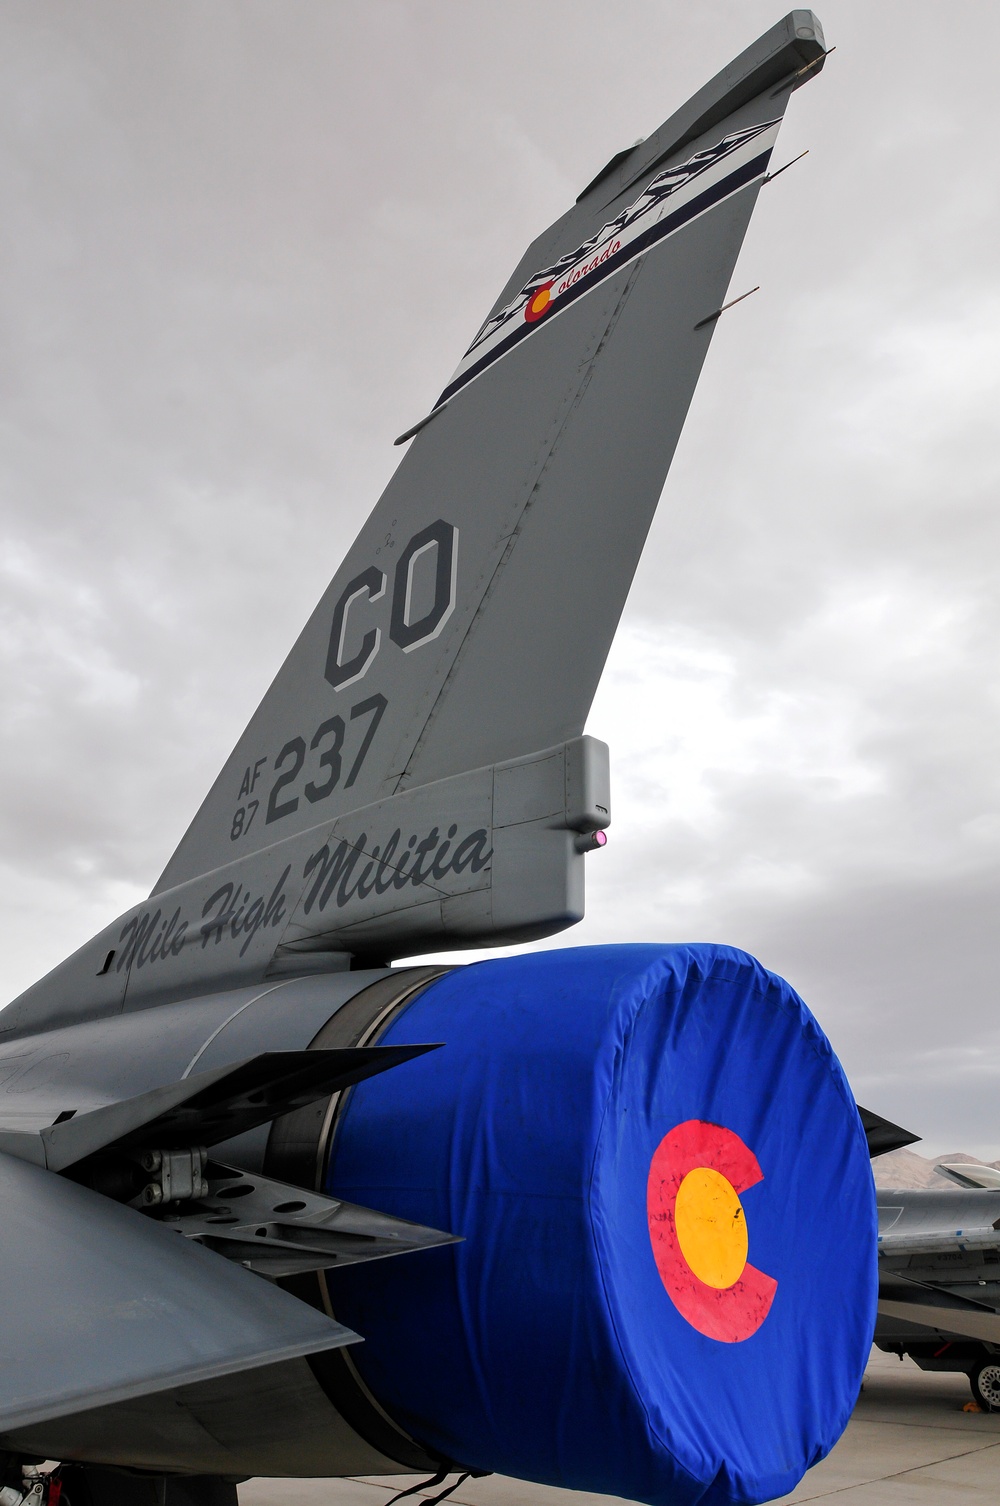 Colorado Air Guard participates in Red Flag 14-1